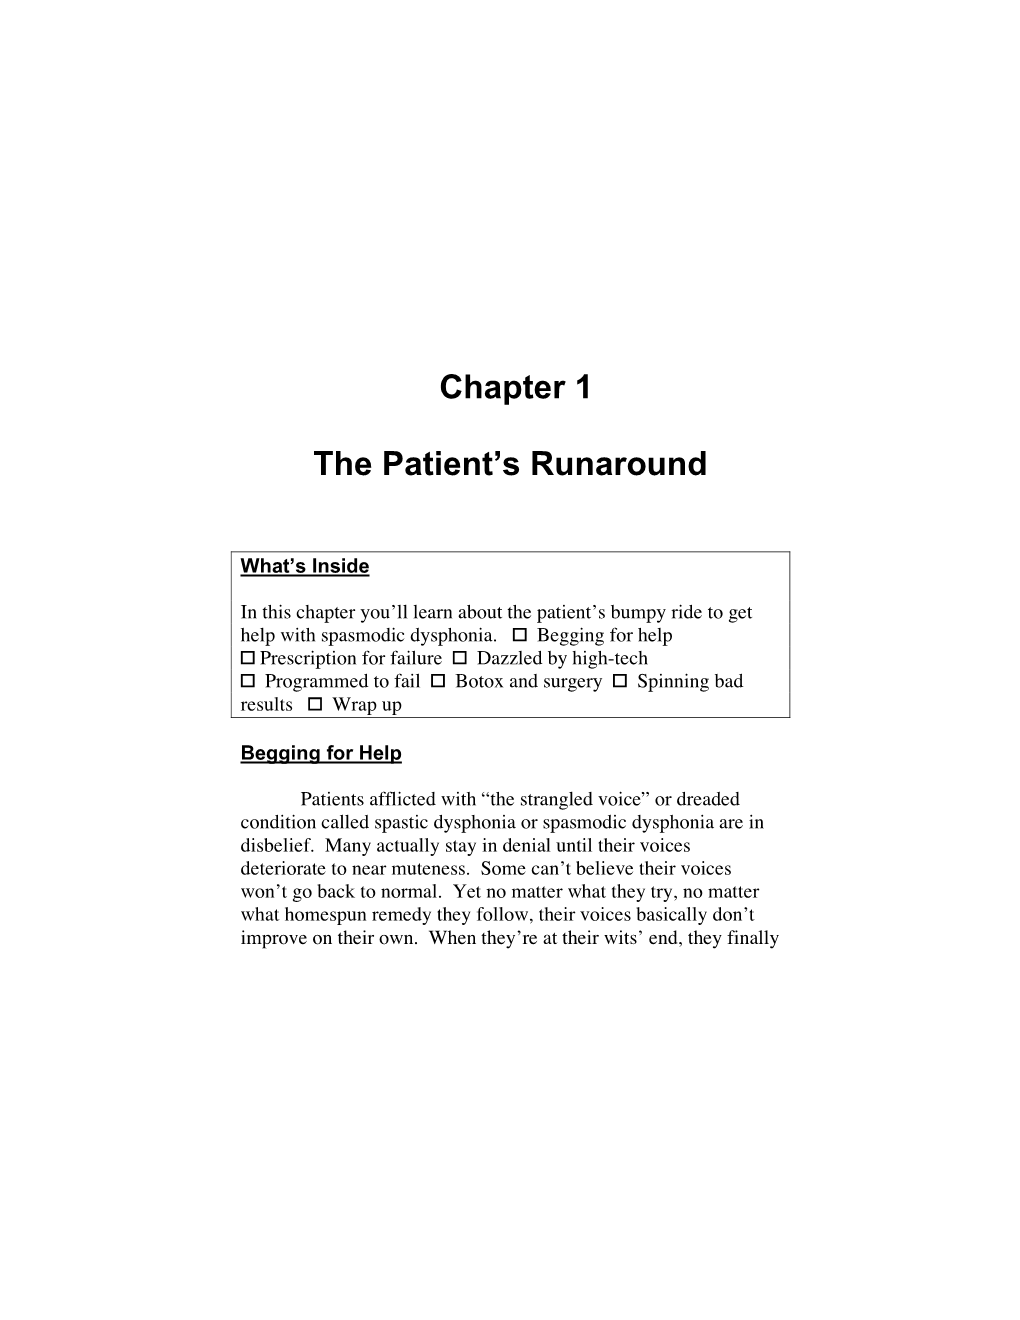 Chapter 1 the Patient's Runaround